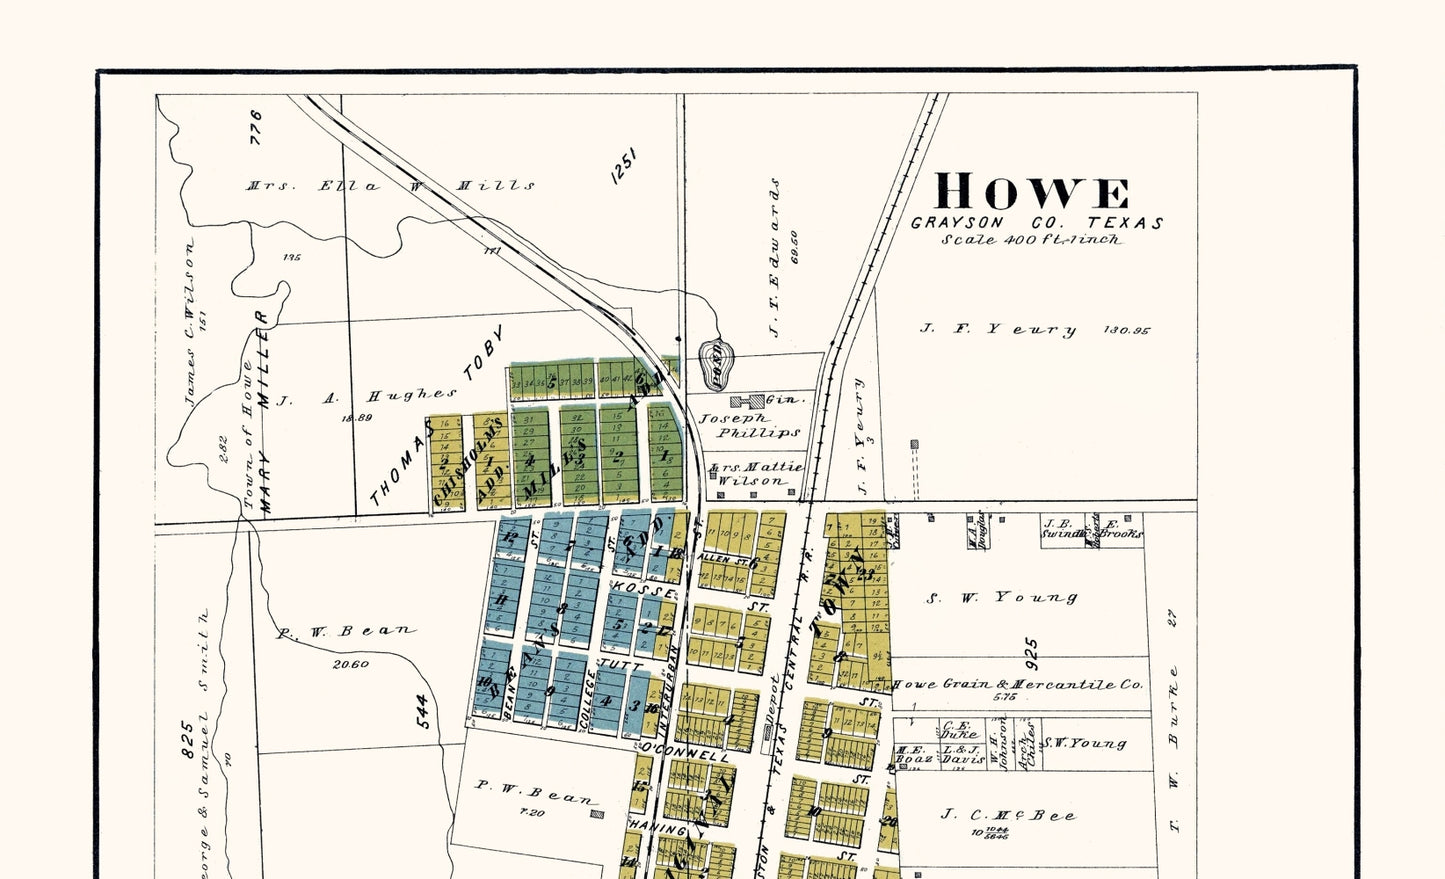 Historic City Map - Howe Dorchester Texas - Jackson 1908 - 23 x 37.82 - Vintage Wall Art